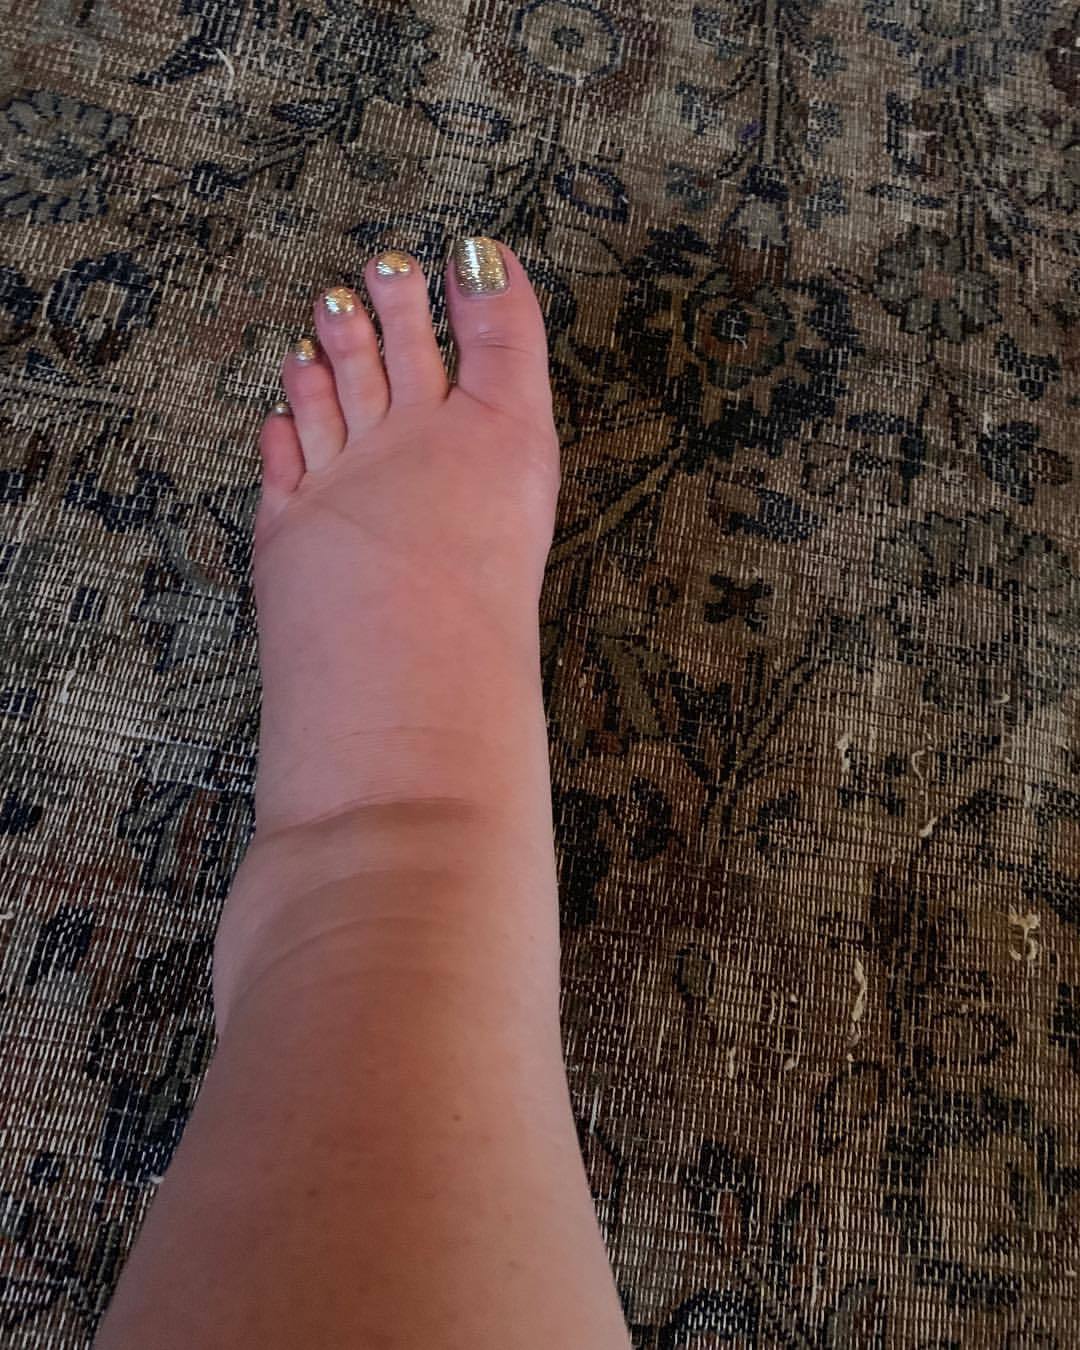 Jessica Simpson's Feet